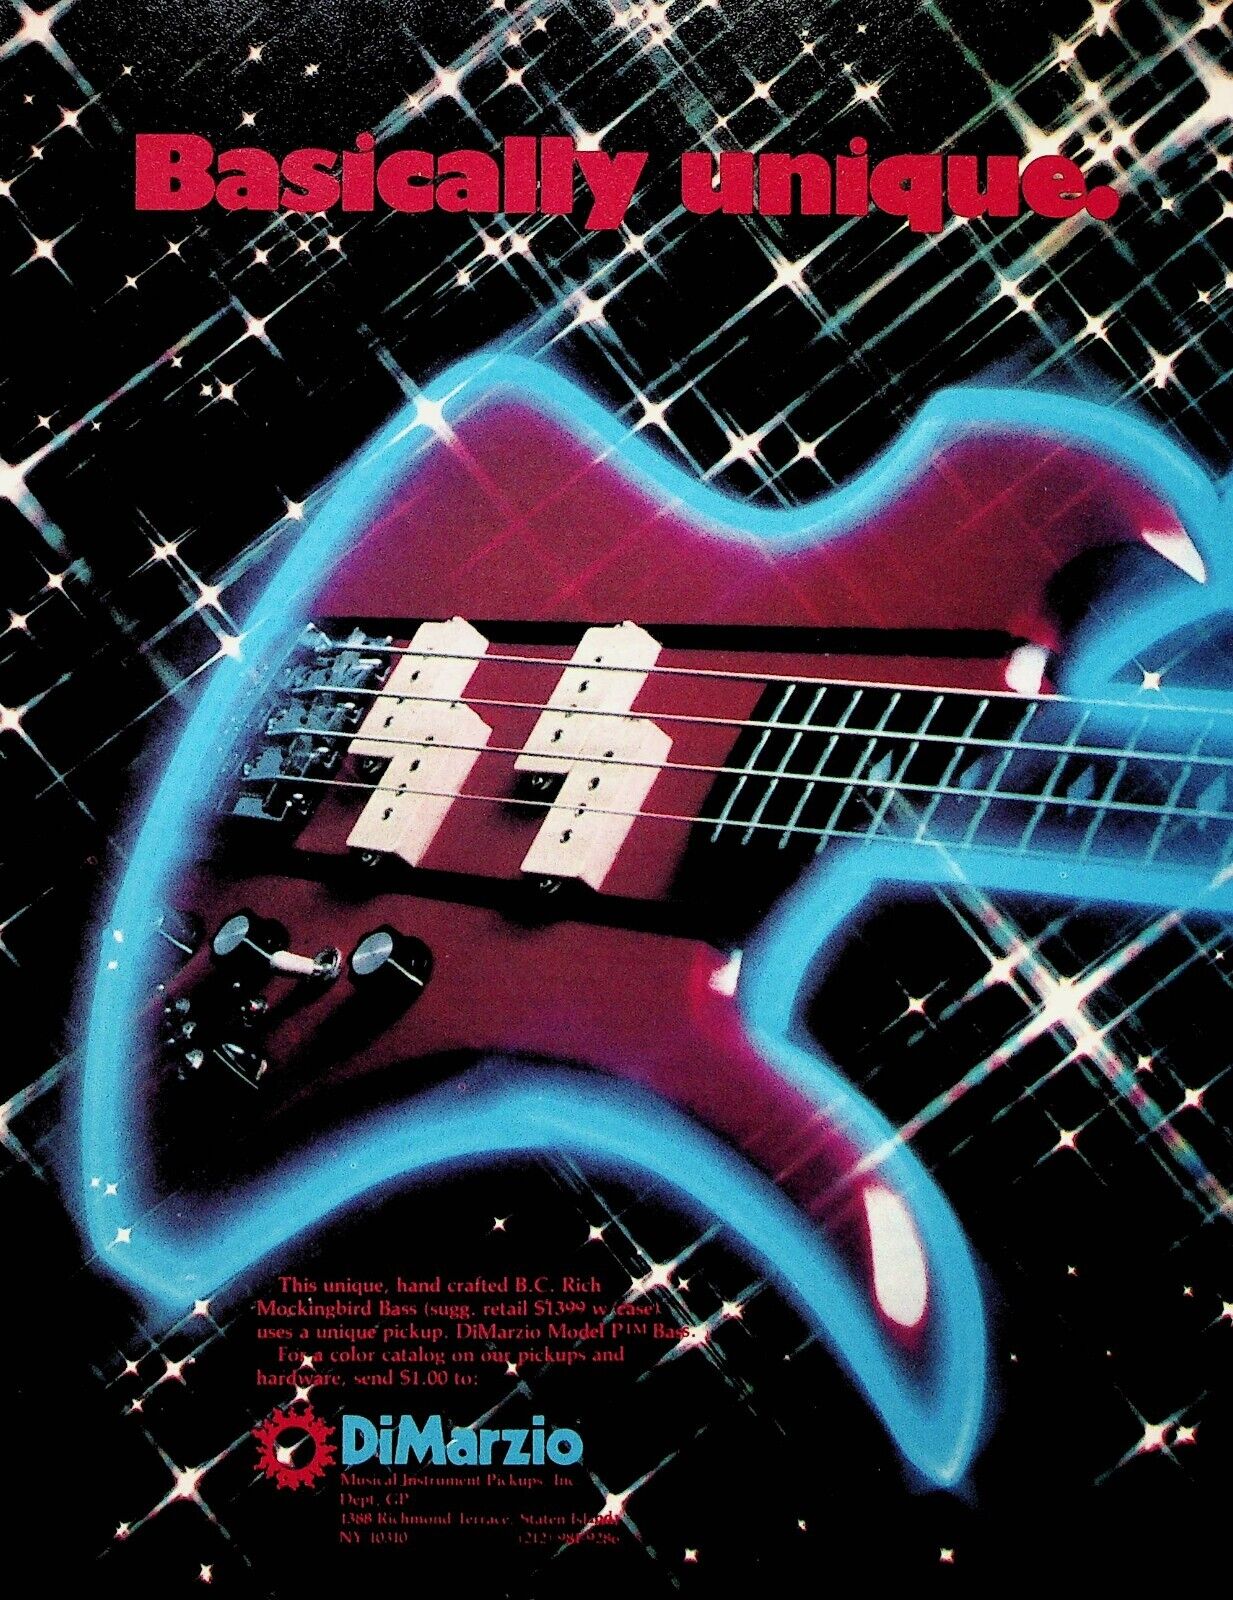 1980 BC Rich Mockingbird Bass Guitar & DiMarzio Pickup - Vintage Advertisement